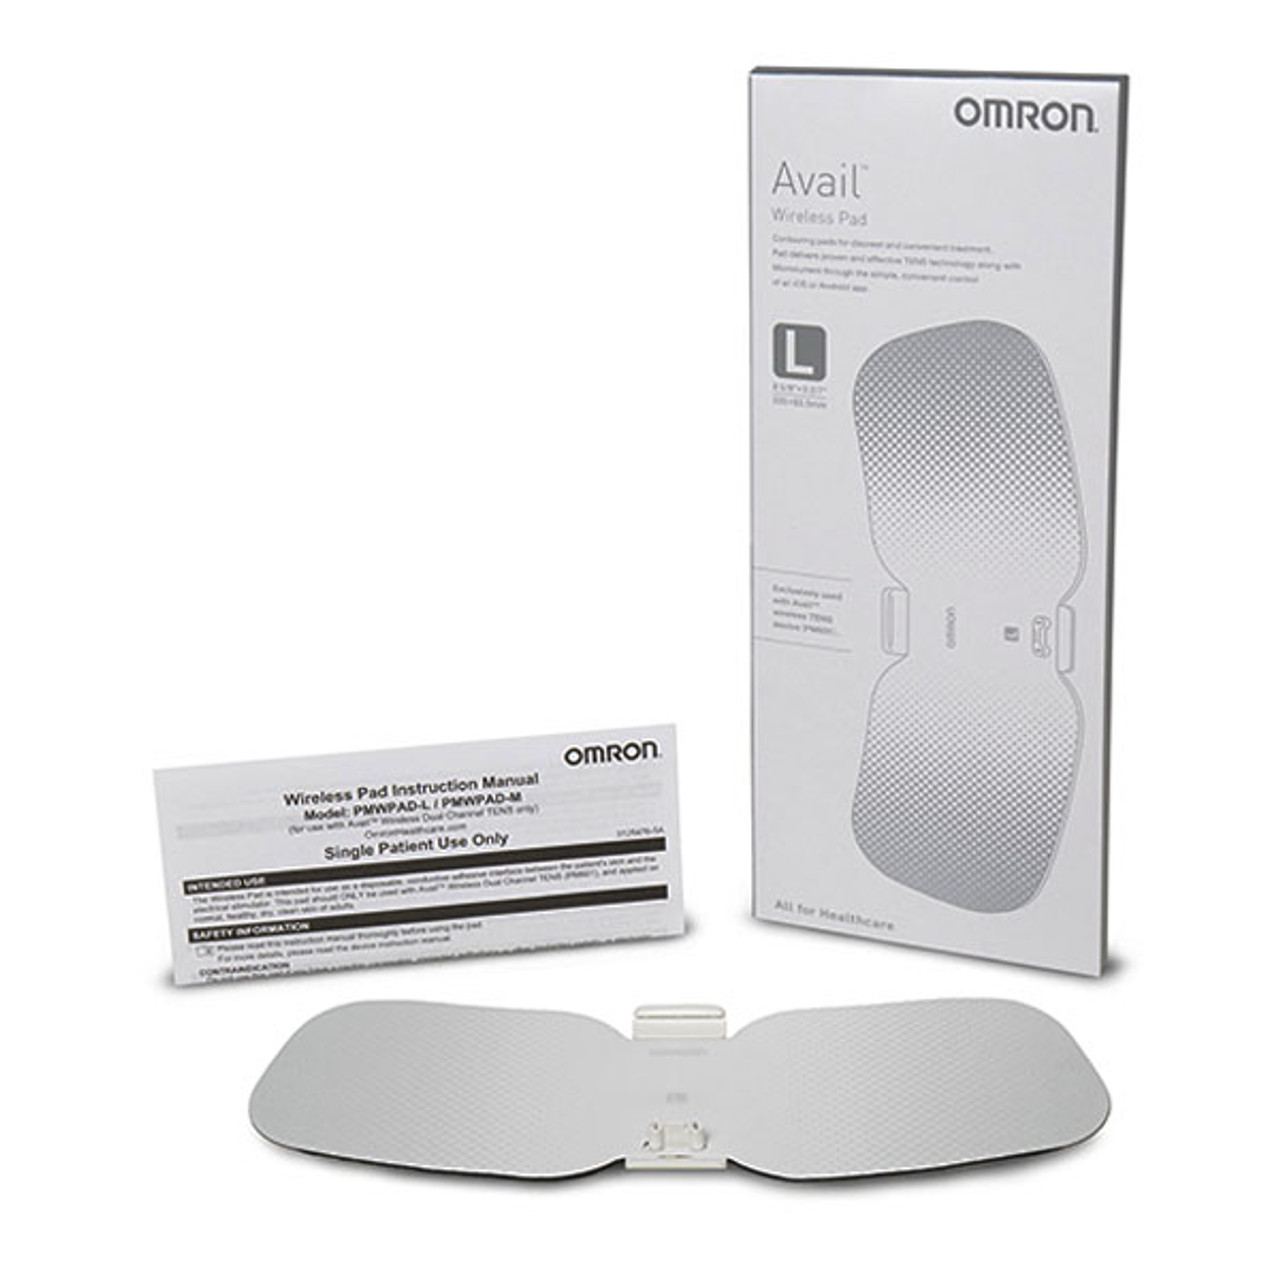 Omron Pm400 Pocket Pain ProTENS Unit, Gray